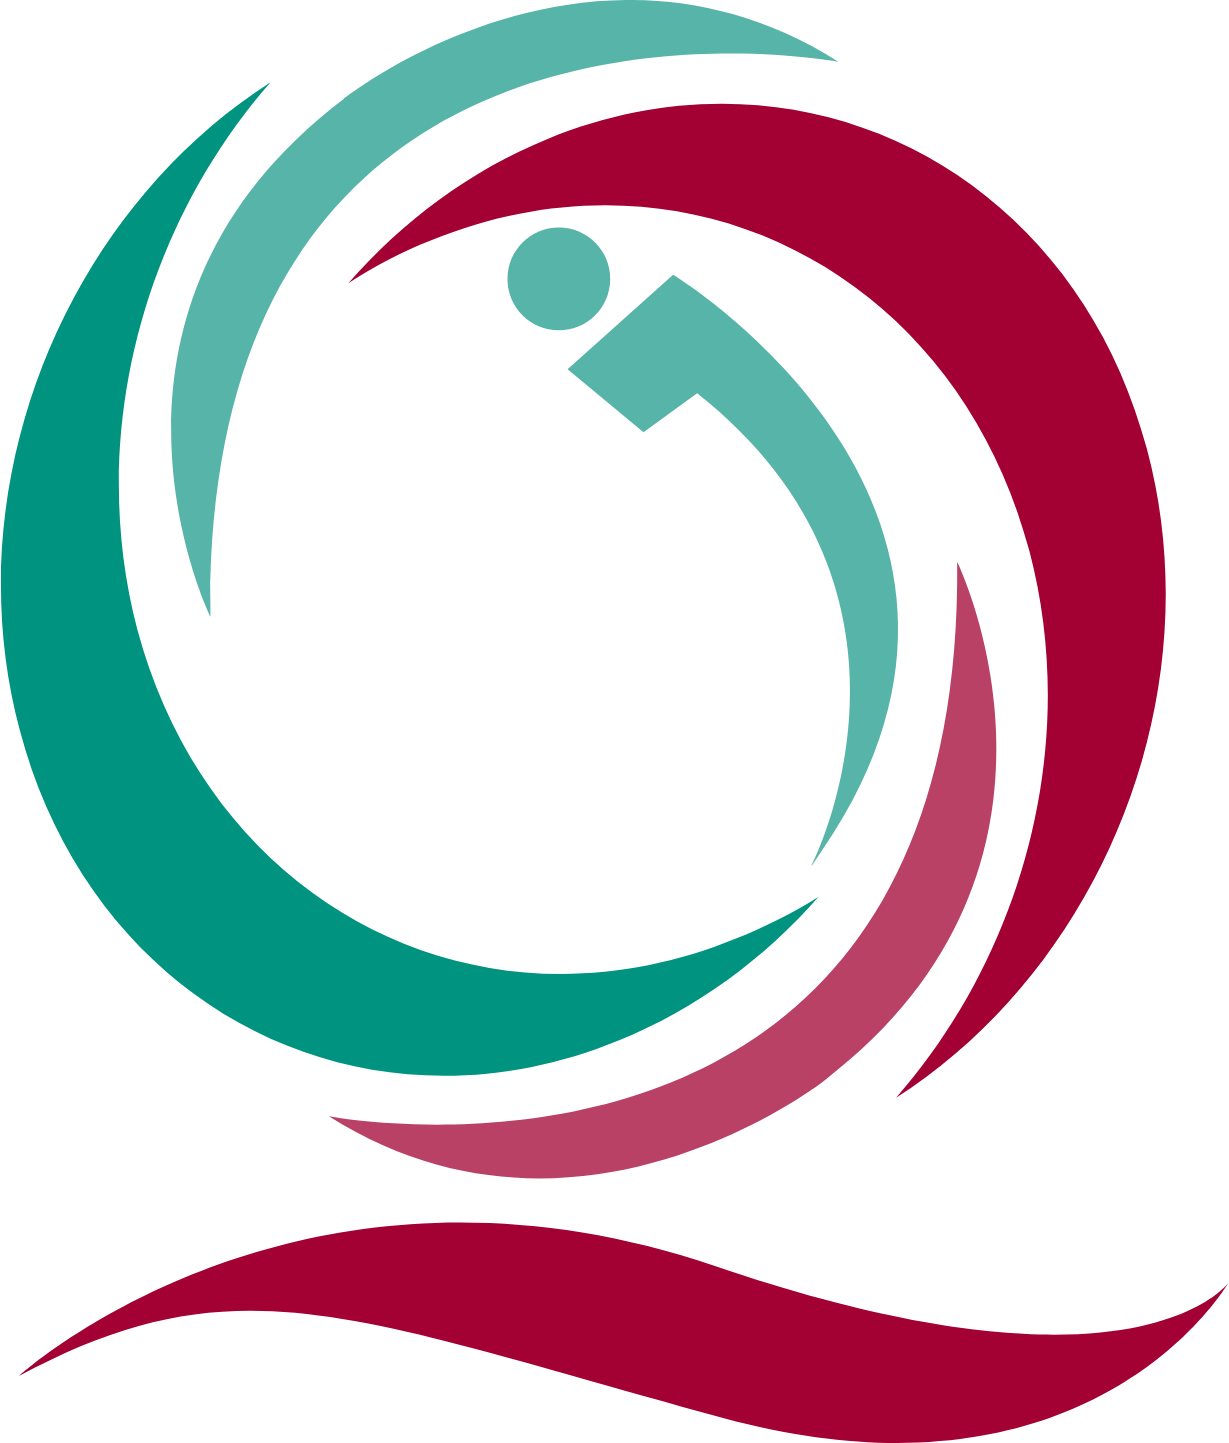 Qatar Oman Investment Company logo (PNG transparent)